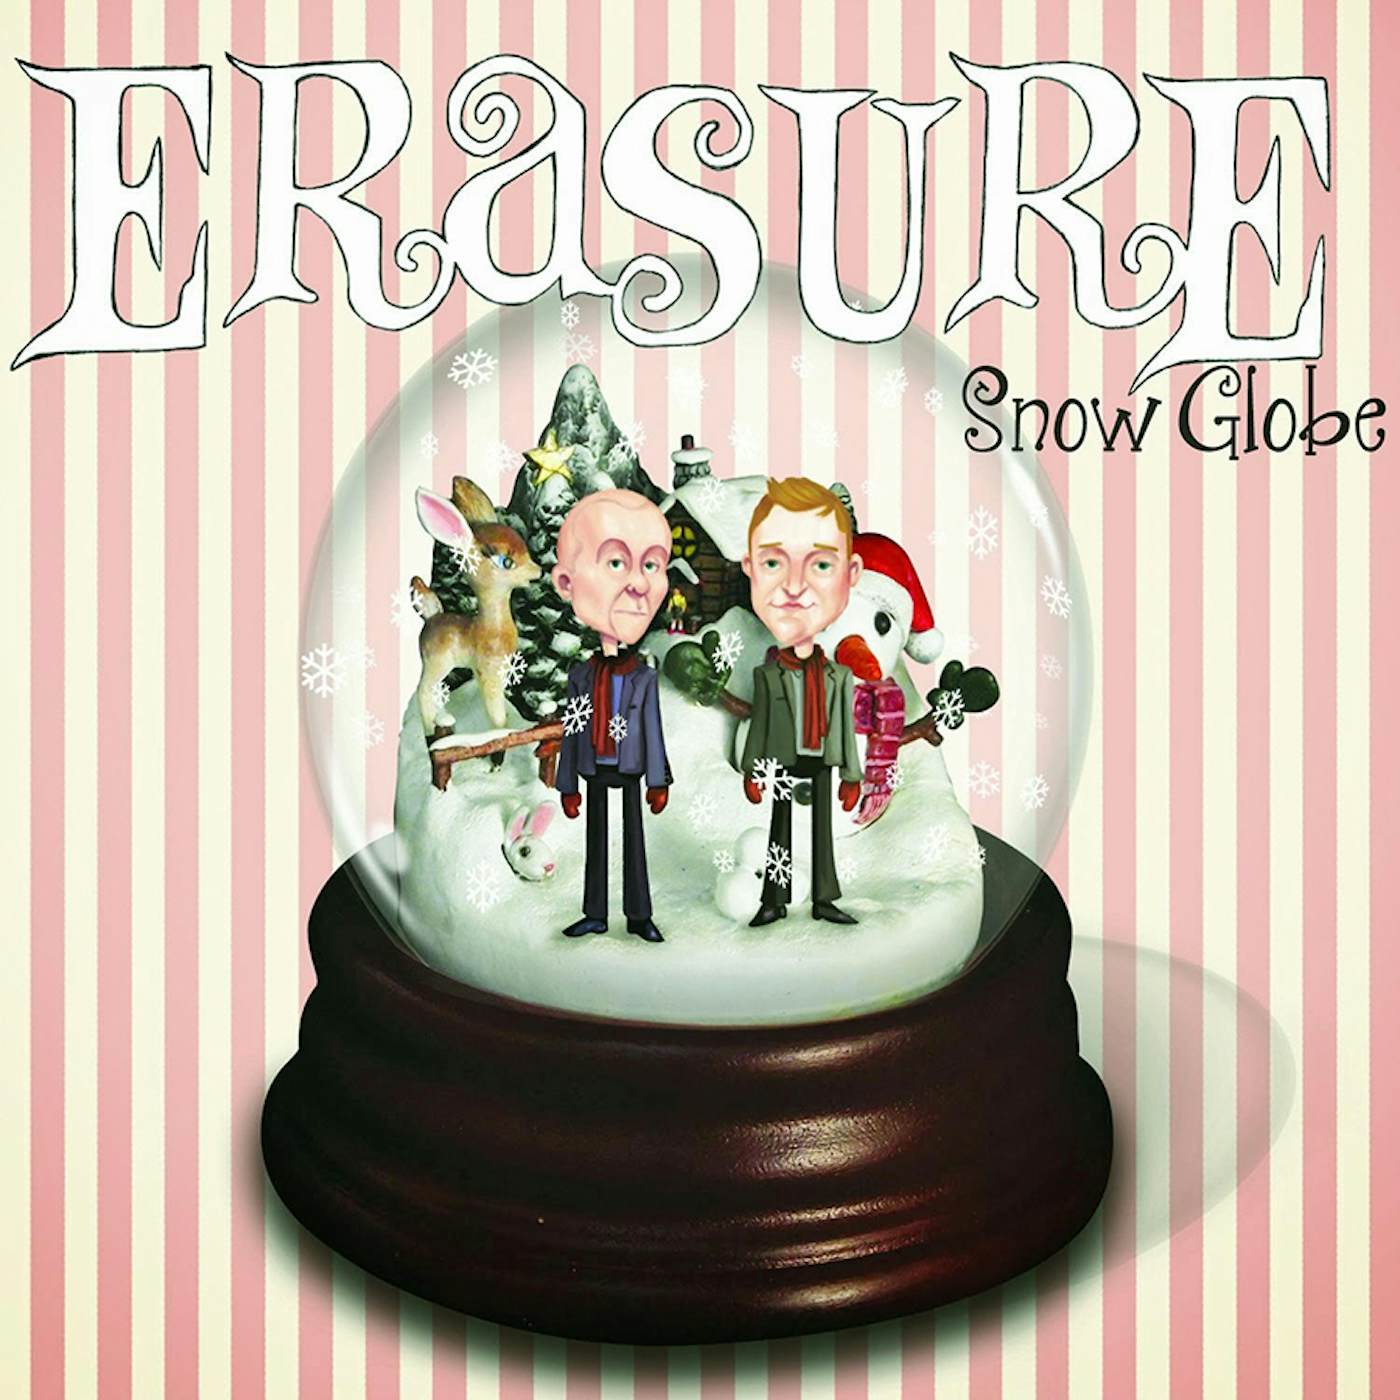 Erasure SNOW GLOBE (REISSUE) Vinyl Record